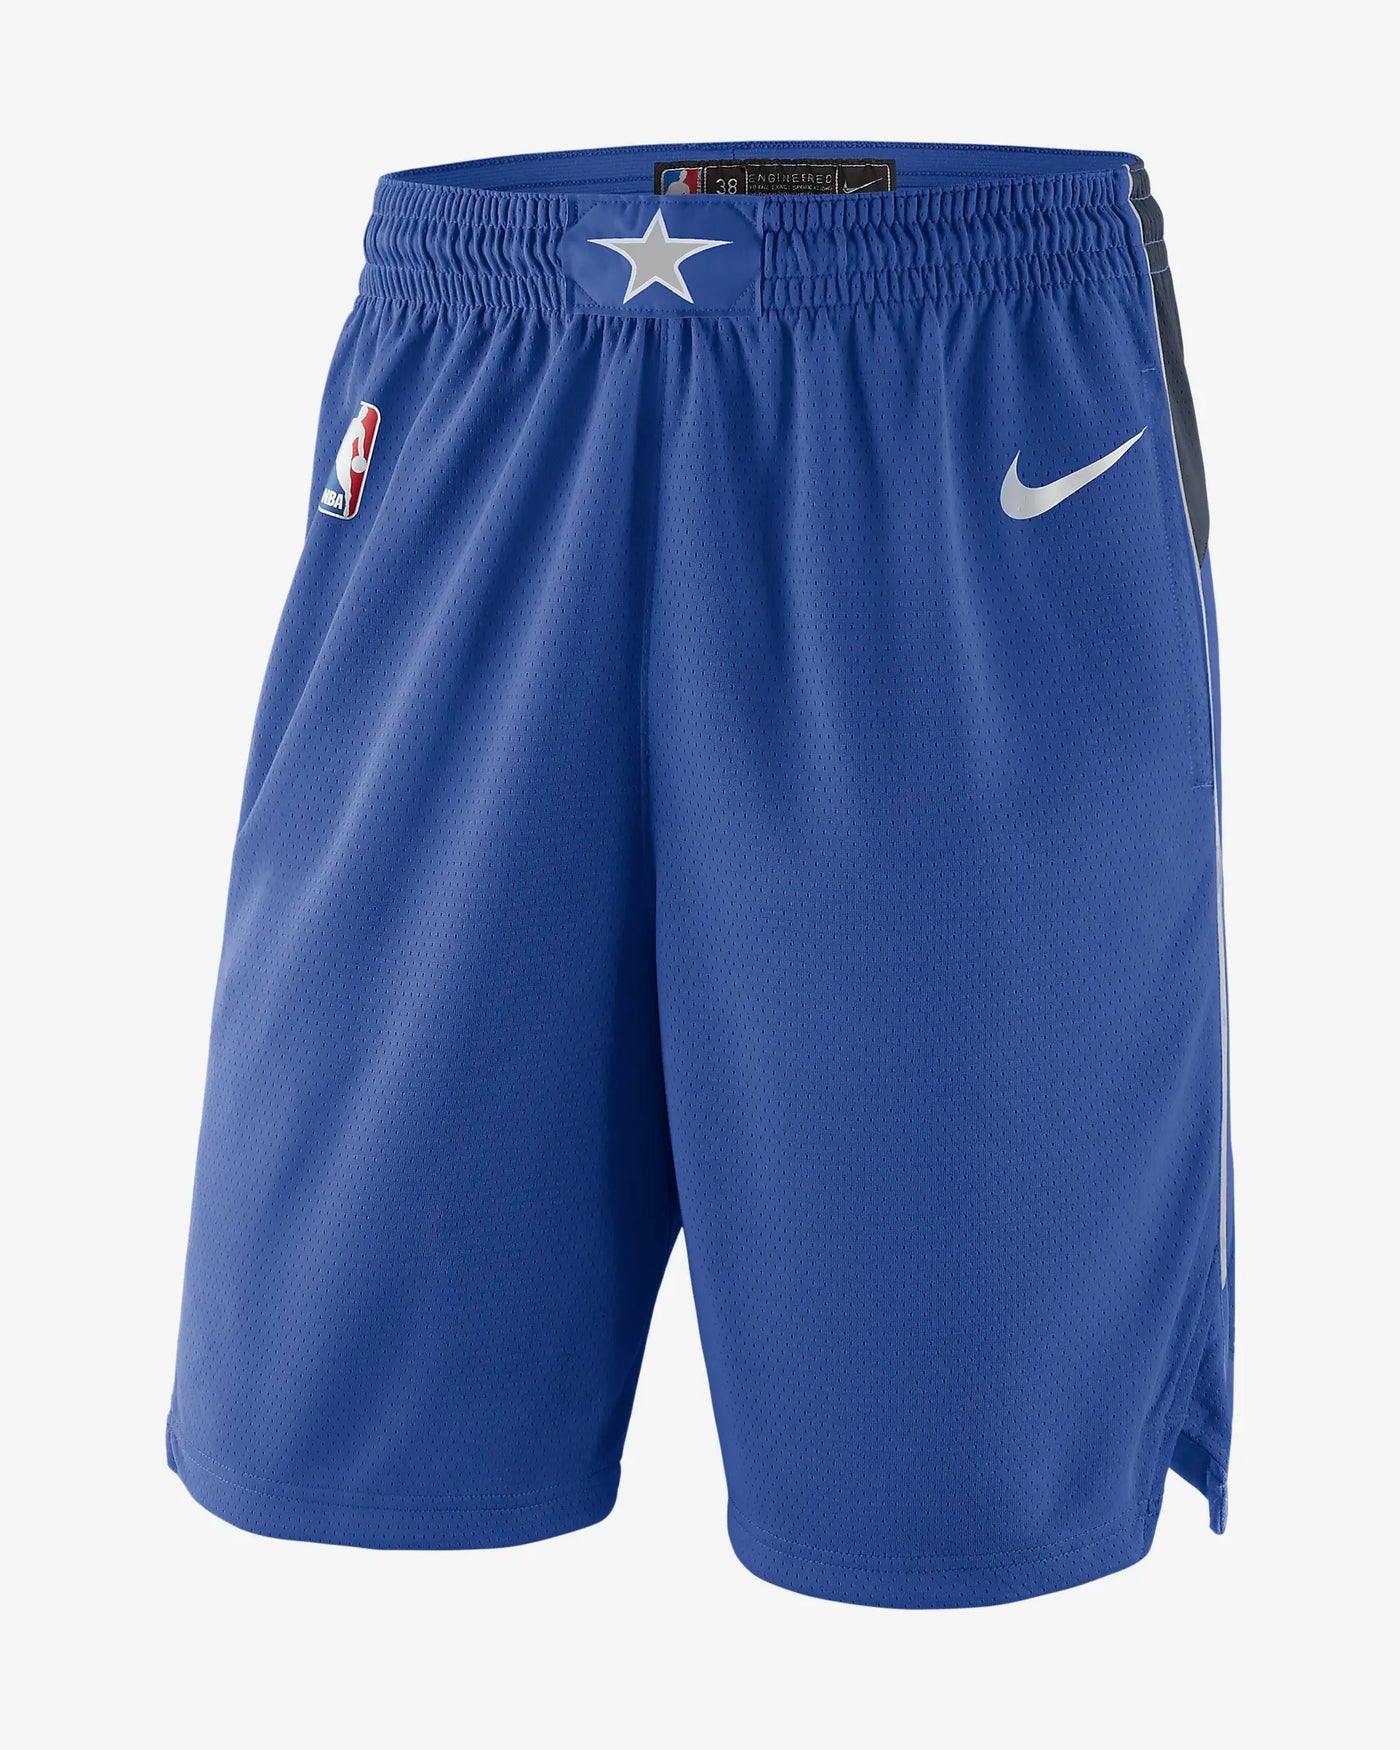 Dallas Mavericks Shorts Blue